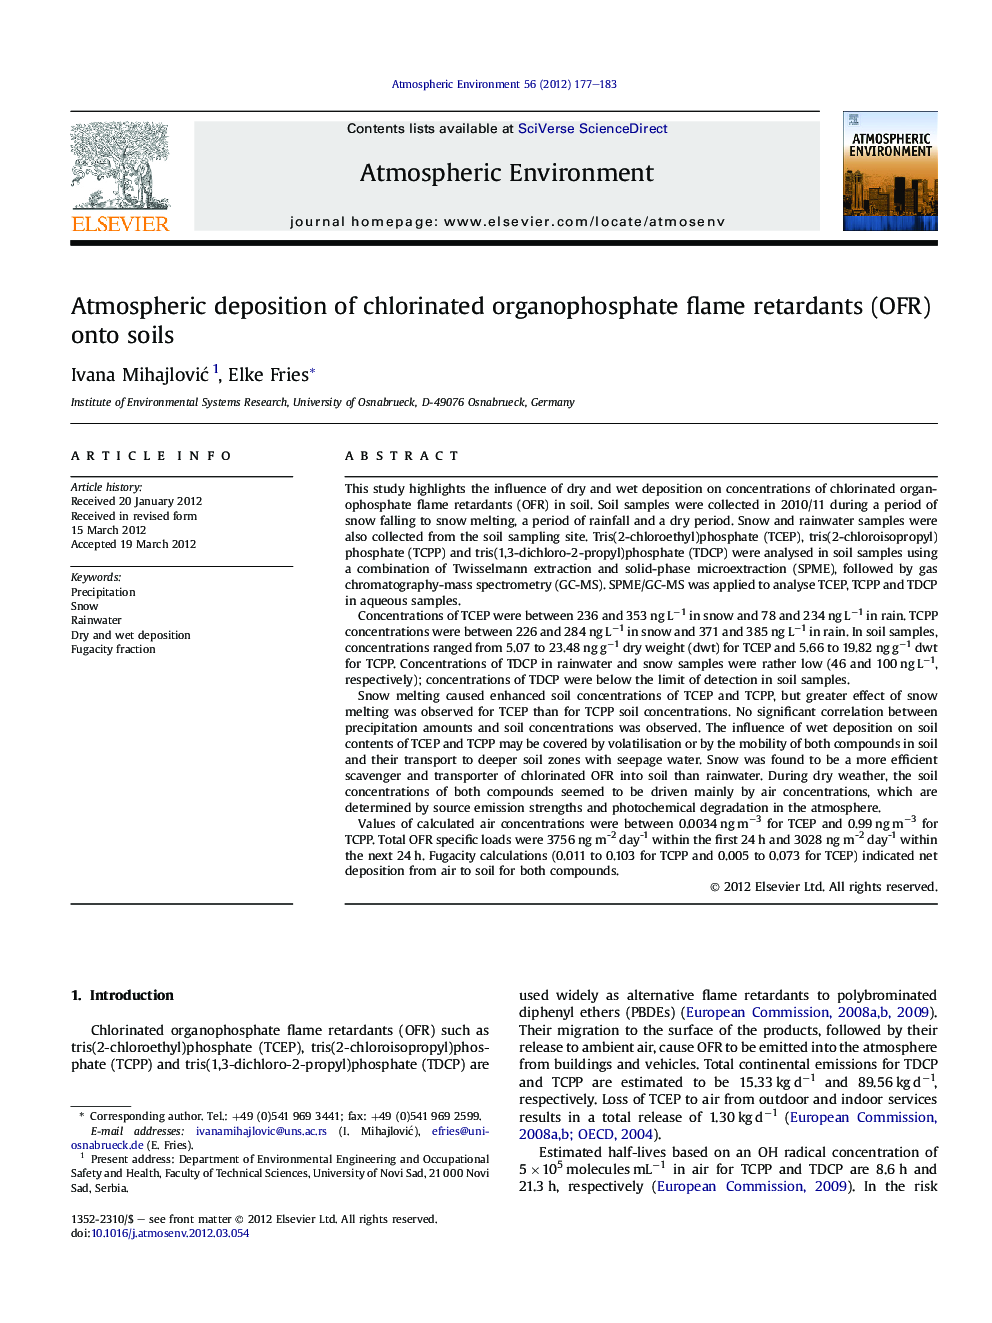 Atmospheric deposition of chlorinated organophosphate flame retardants (OFR) onto soils